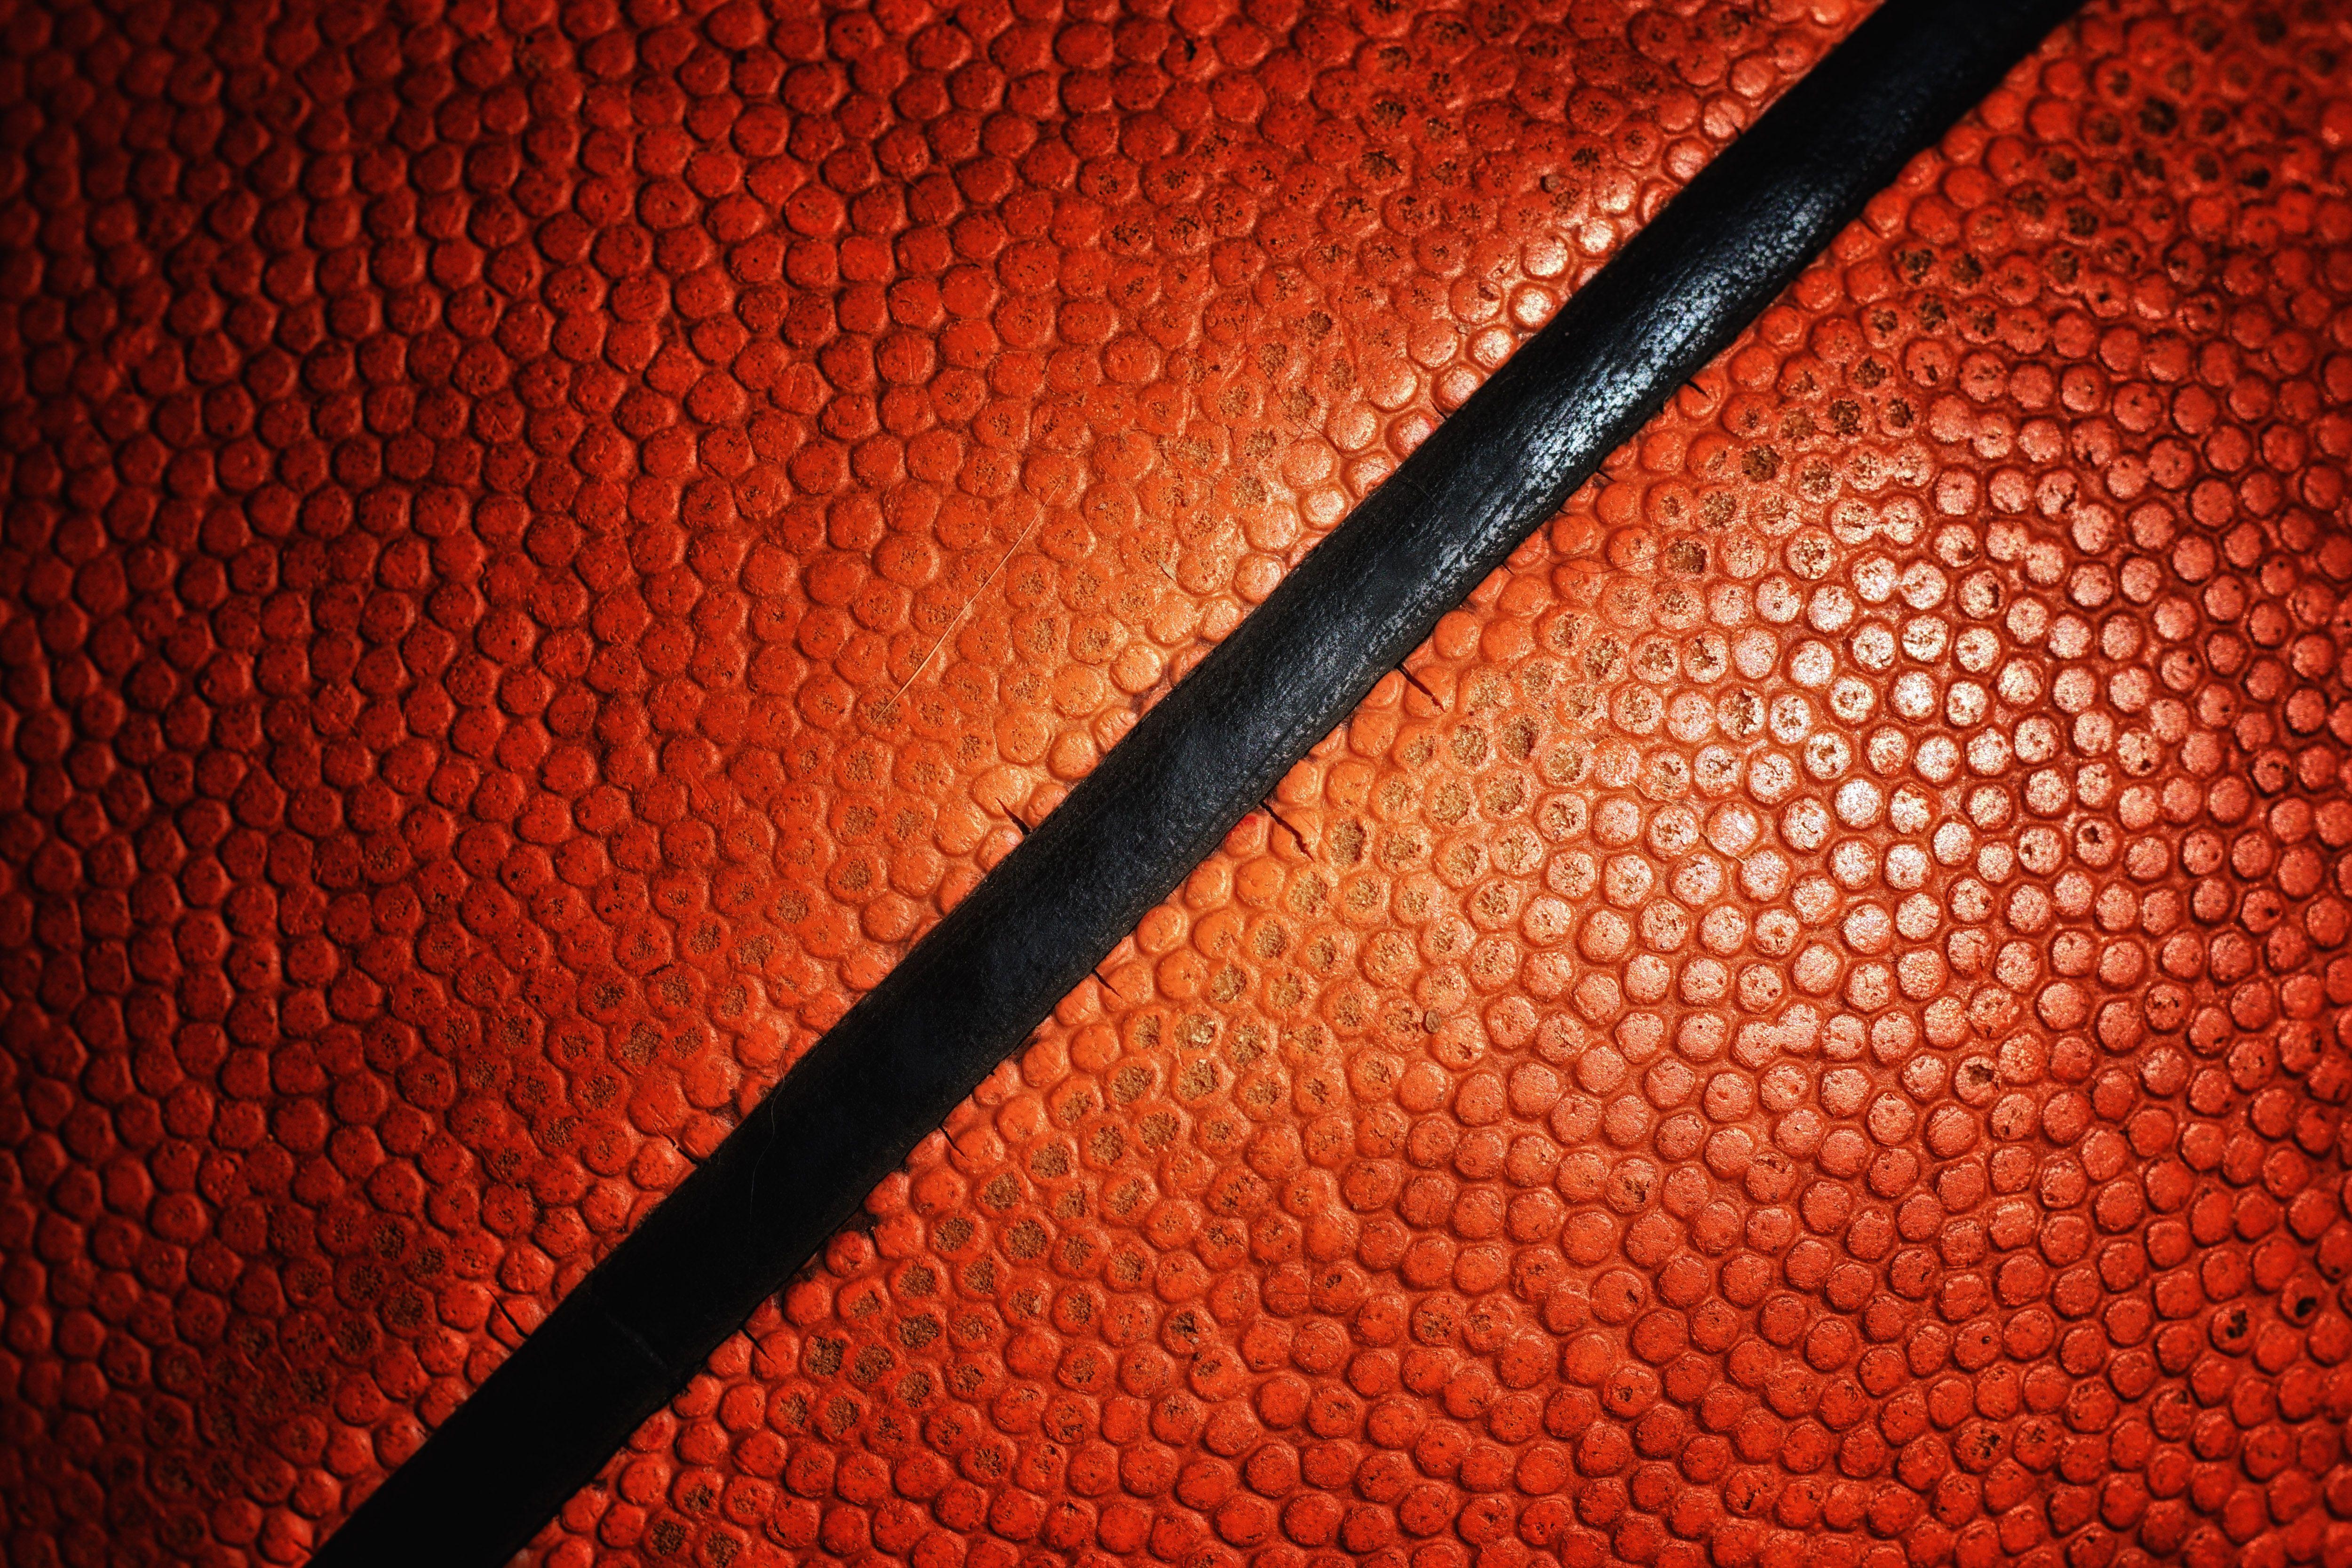 Three background image of an orange basketball texture